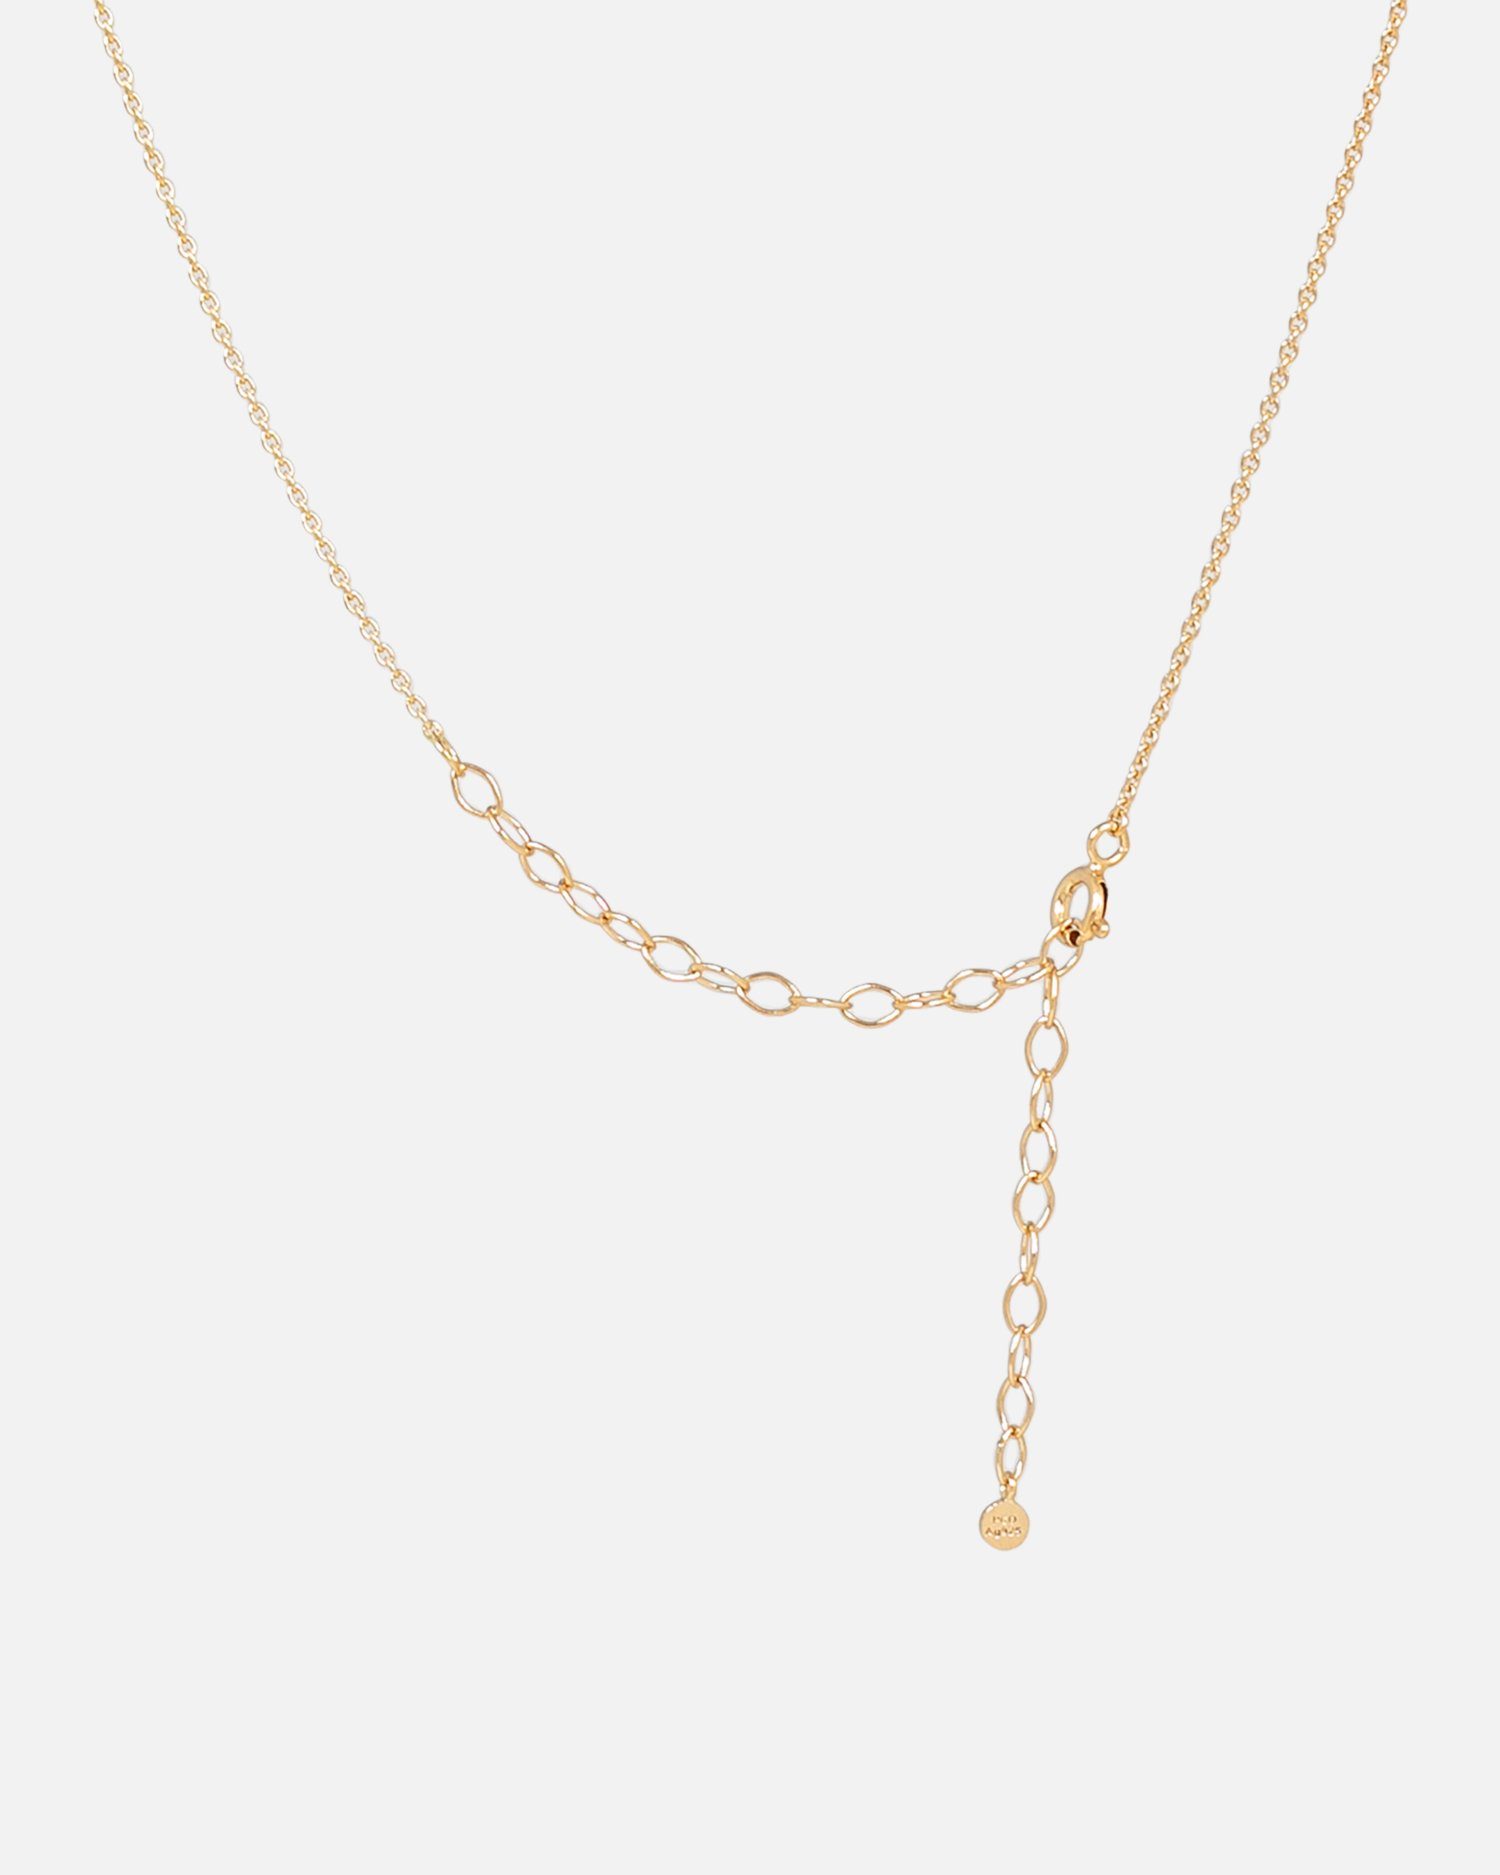 925, Pernille Halskette Kette Fern Anhänger cm, Damen Silber Leaf Corydon 18 50-55 vergoldet Karat mit